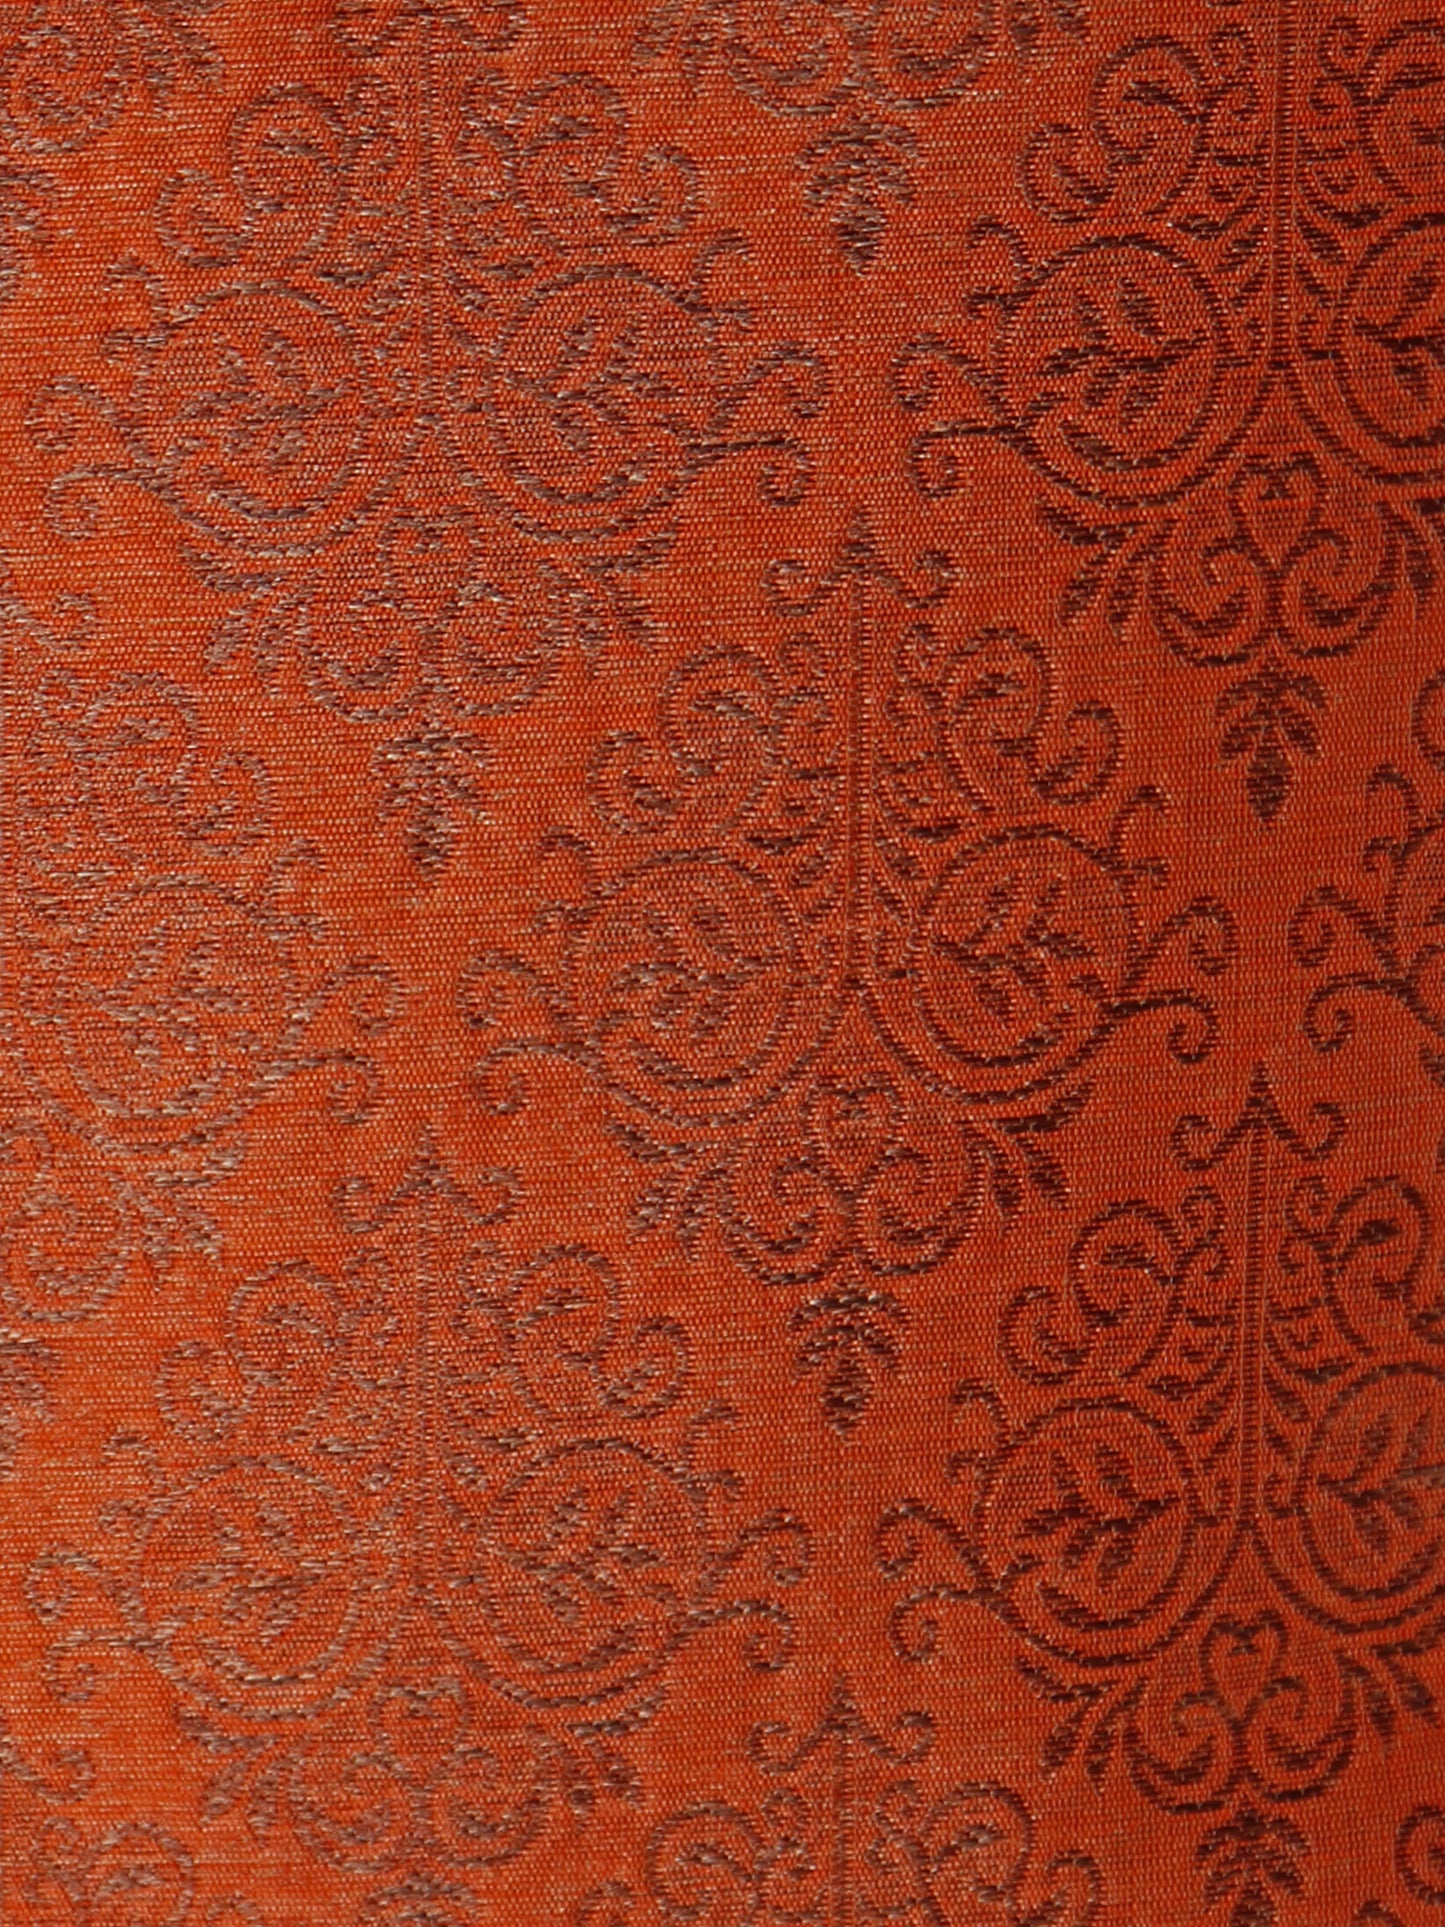 Cushion Cover Cotton Blend Self Textured Brocade Orange - 16" X 16"